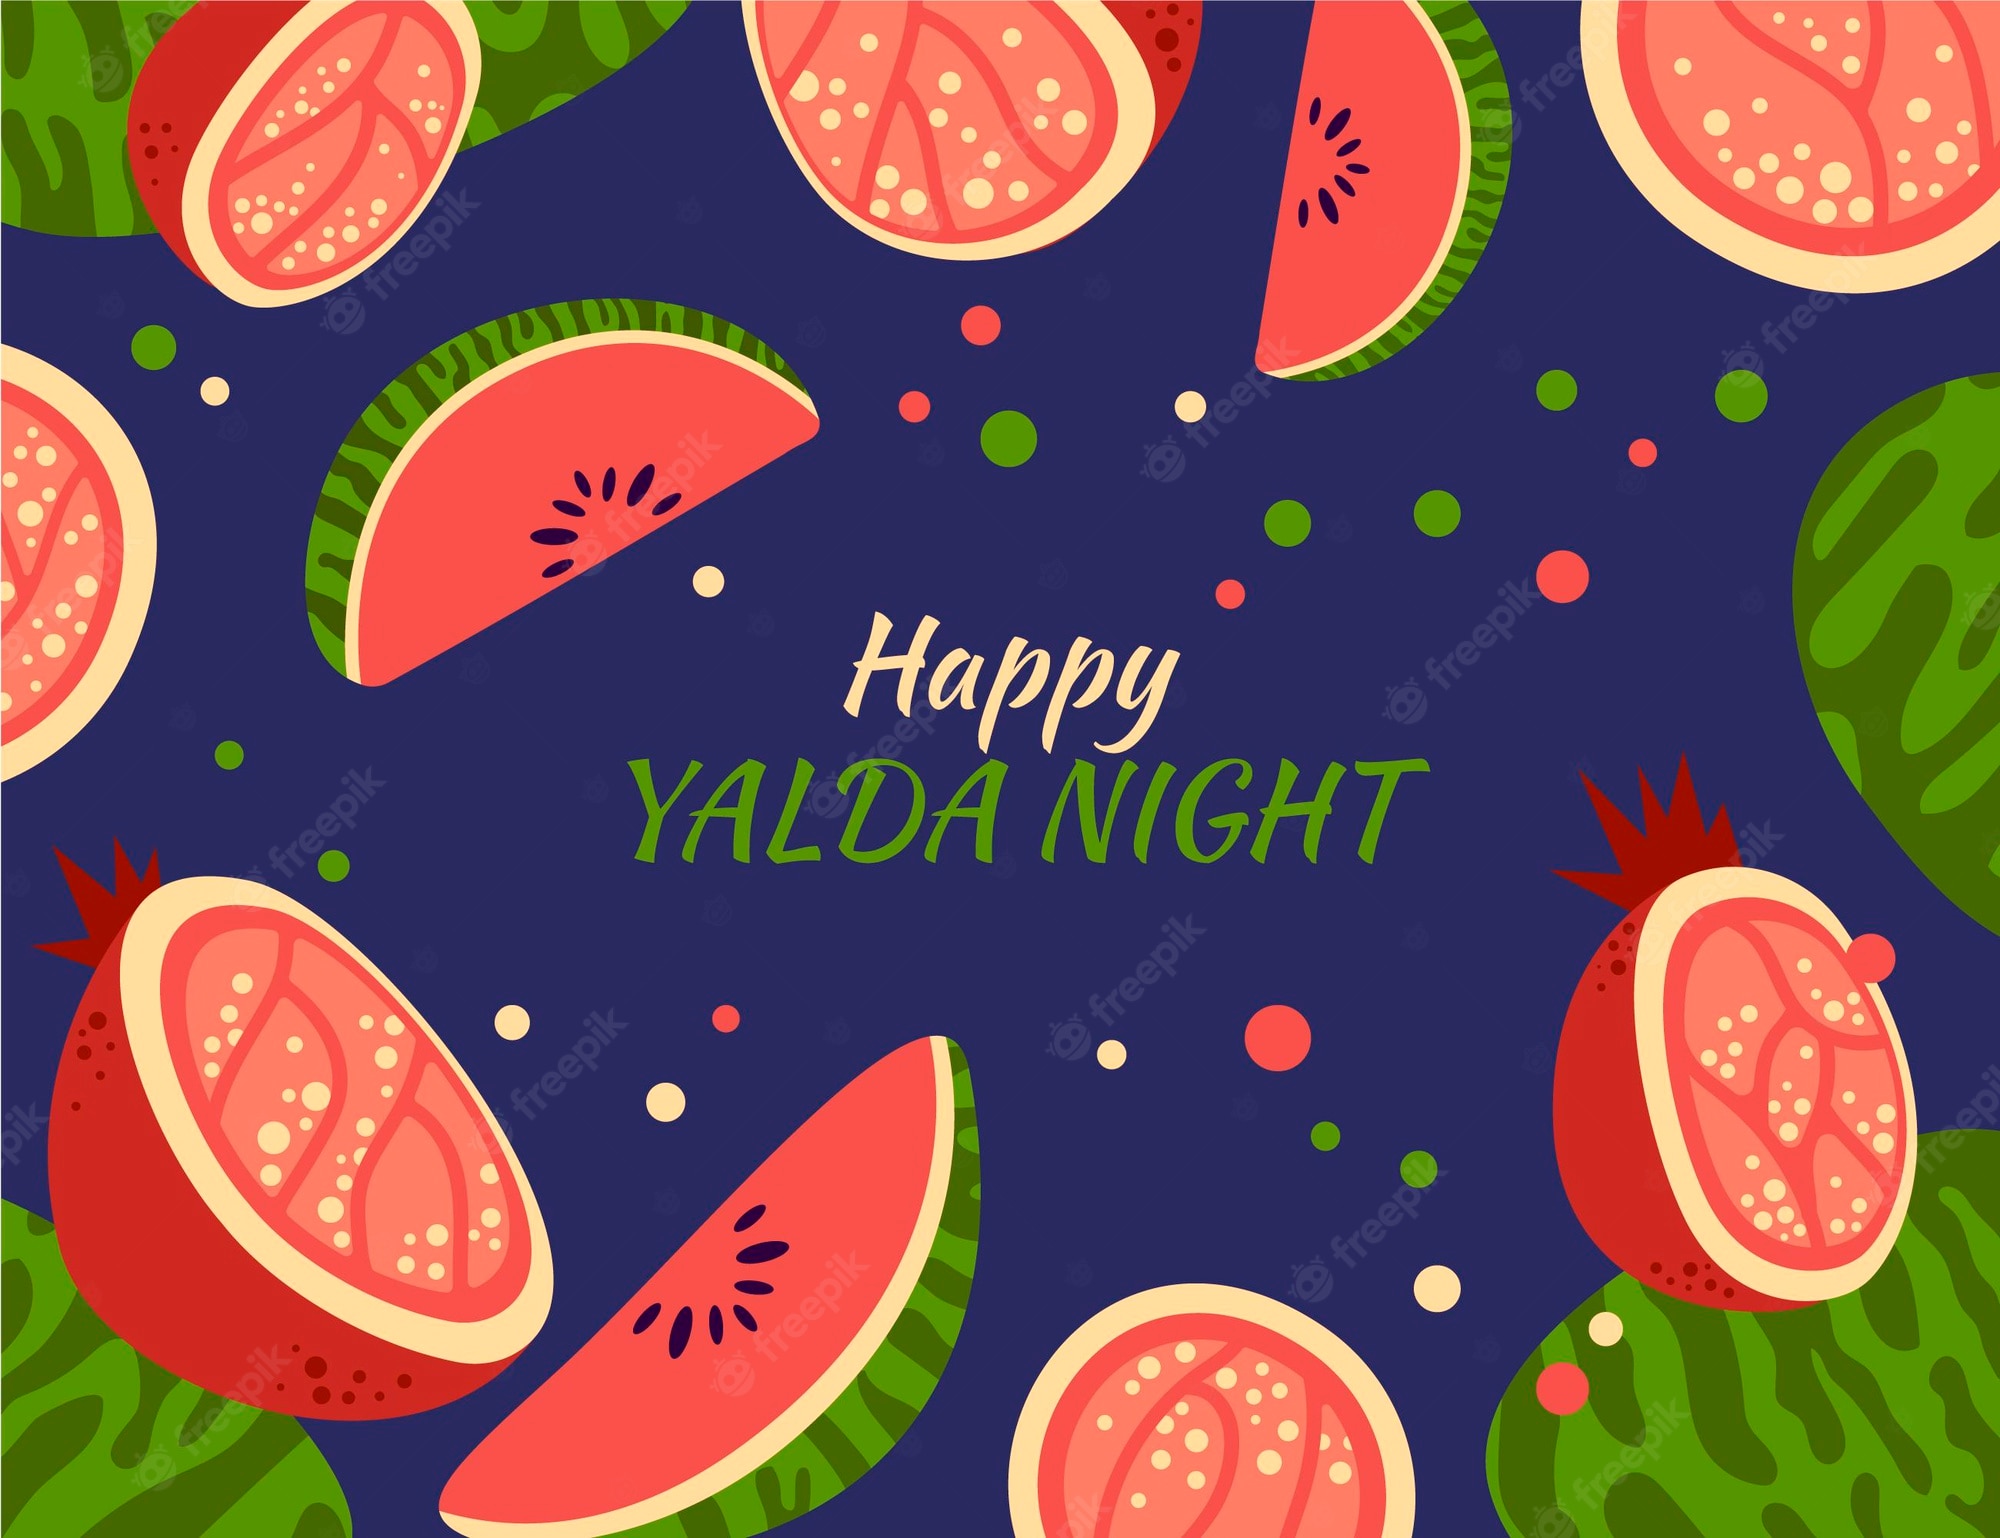 Yalda Night Image. Free Vectors, & PSD